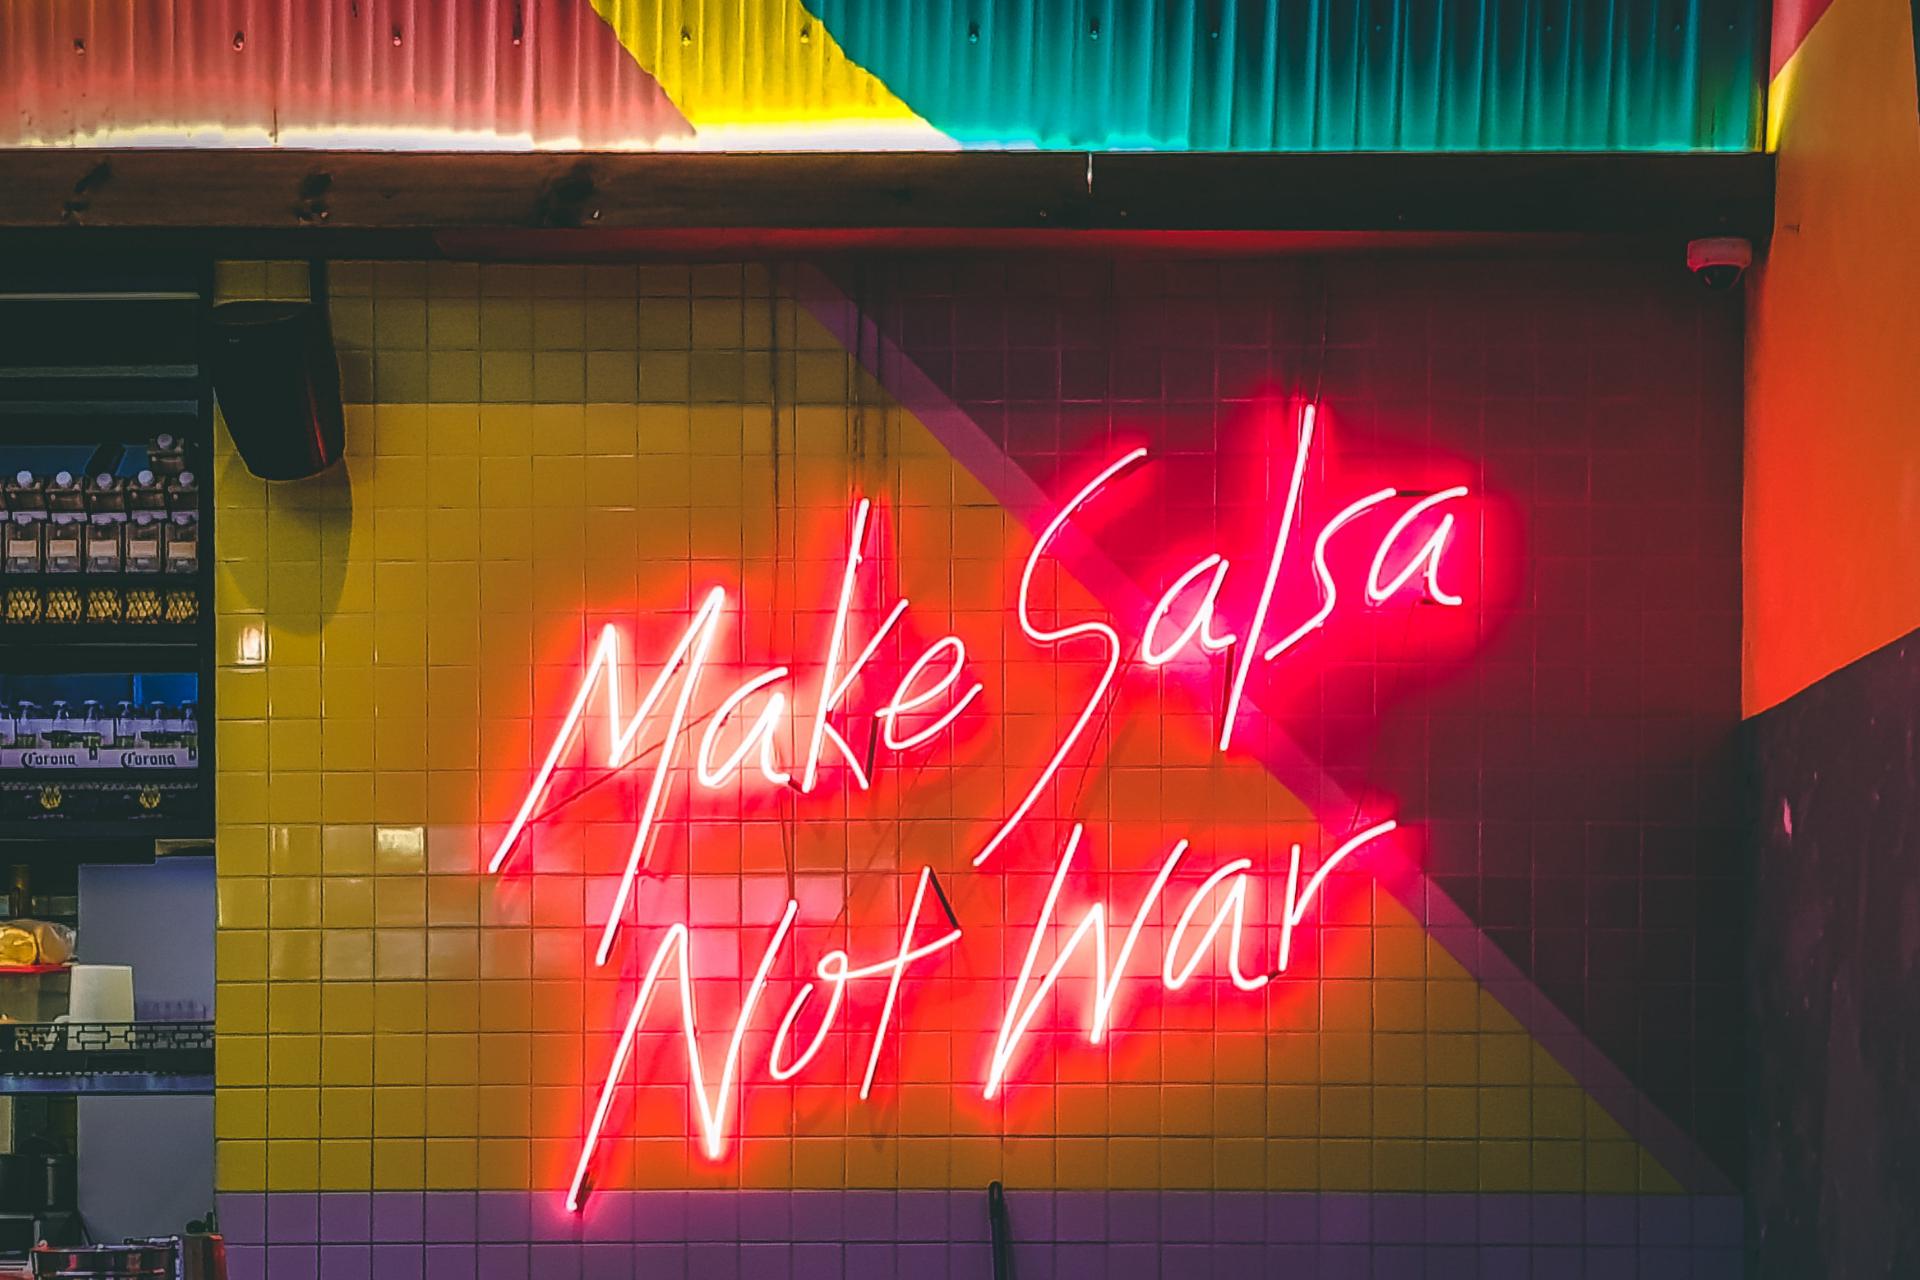 Make salsa not war sign and restaurant values